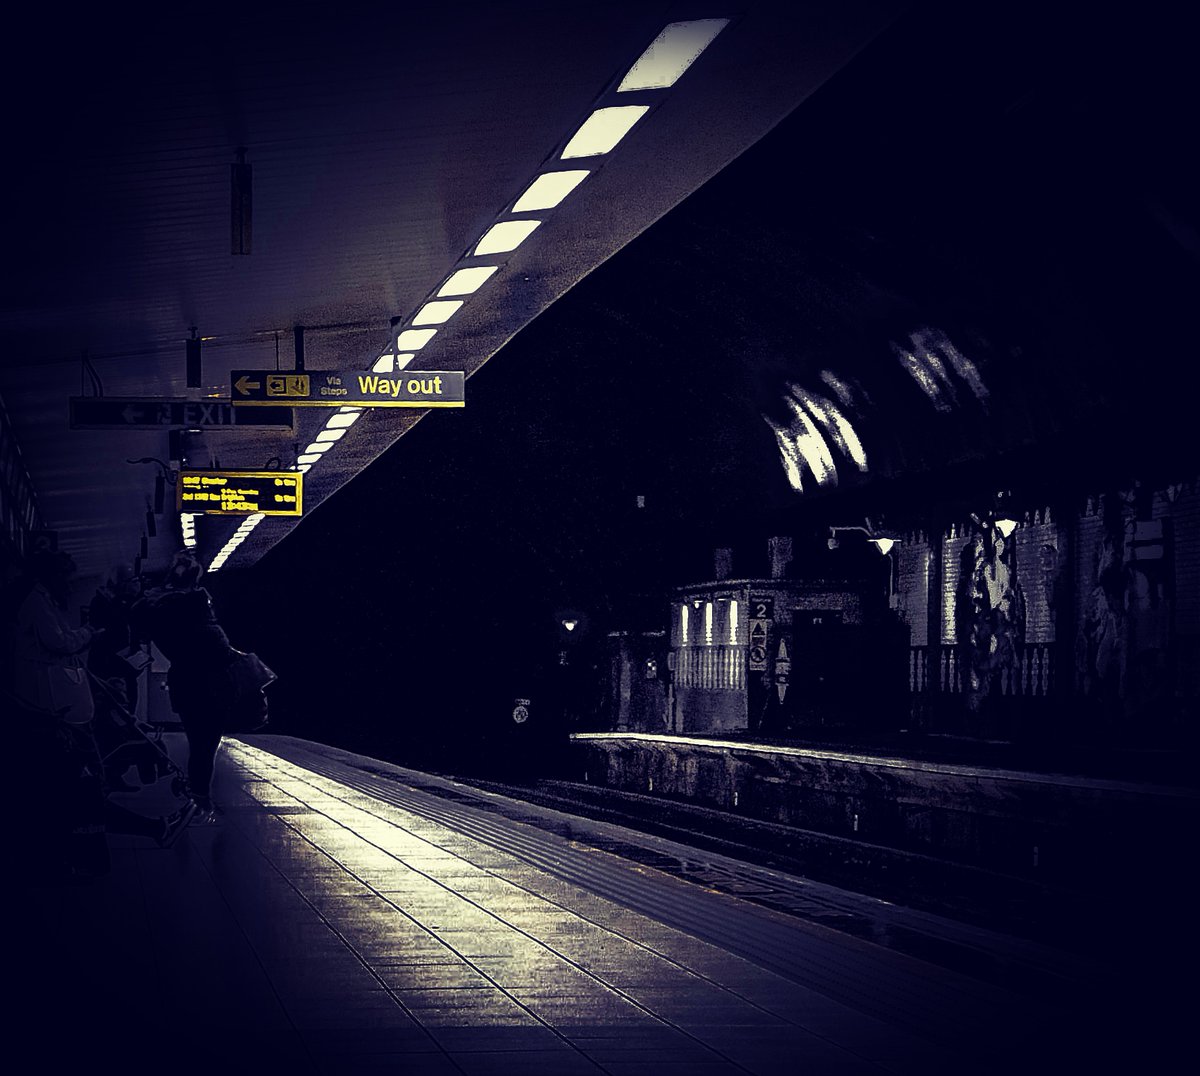 Waiting for the train ©marc Gibbs 2018
#anotherbeardedphotographer #lightroom #photooftheday #photoshop  #wirralline #subway #liverpool #merseyside #newphoto #streetphotography #canonphotography #canon #sigma #lights #canon77d #77d #followfollow #lights #public  #trainstation